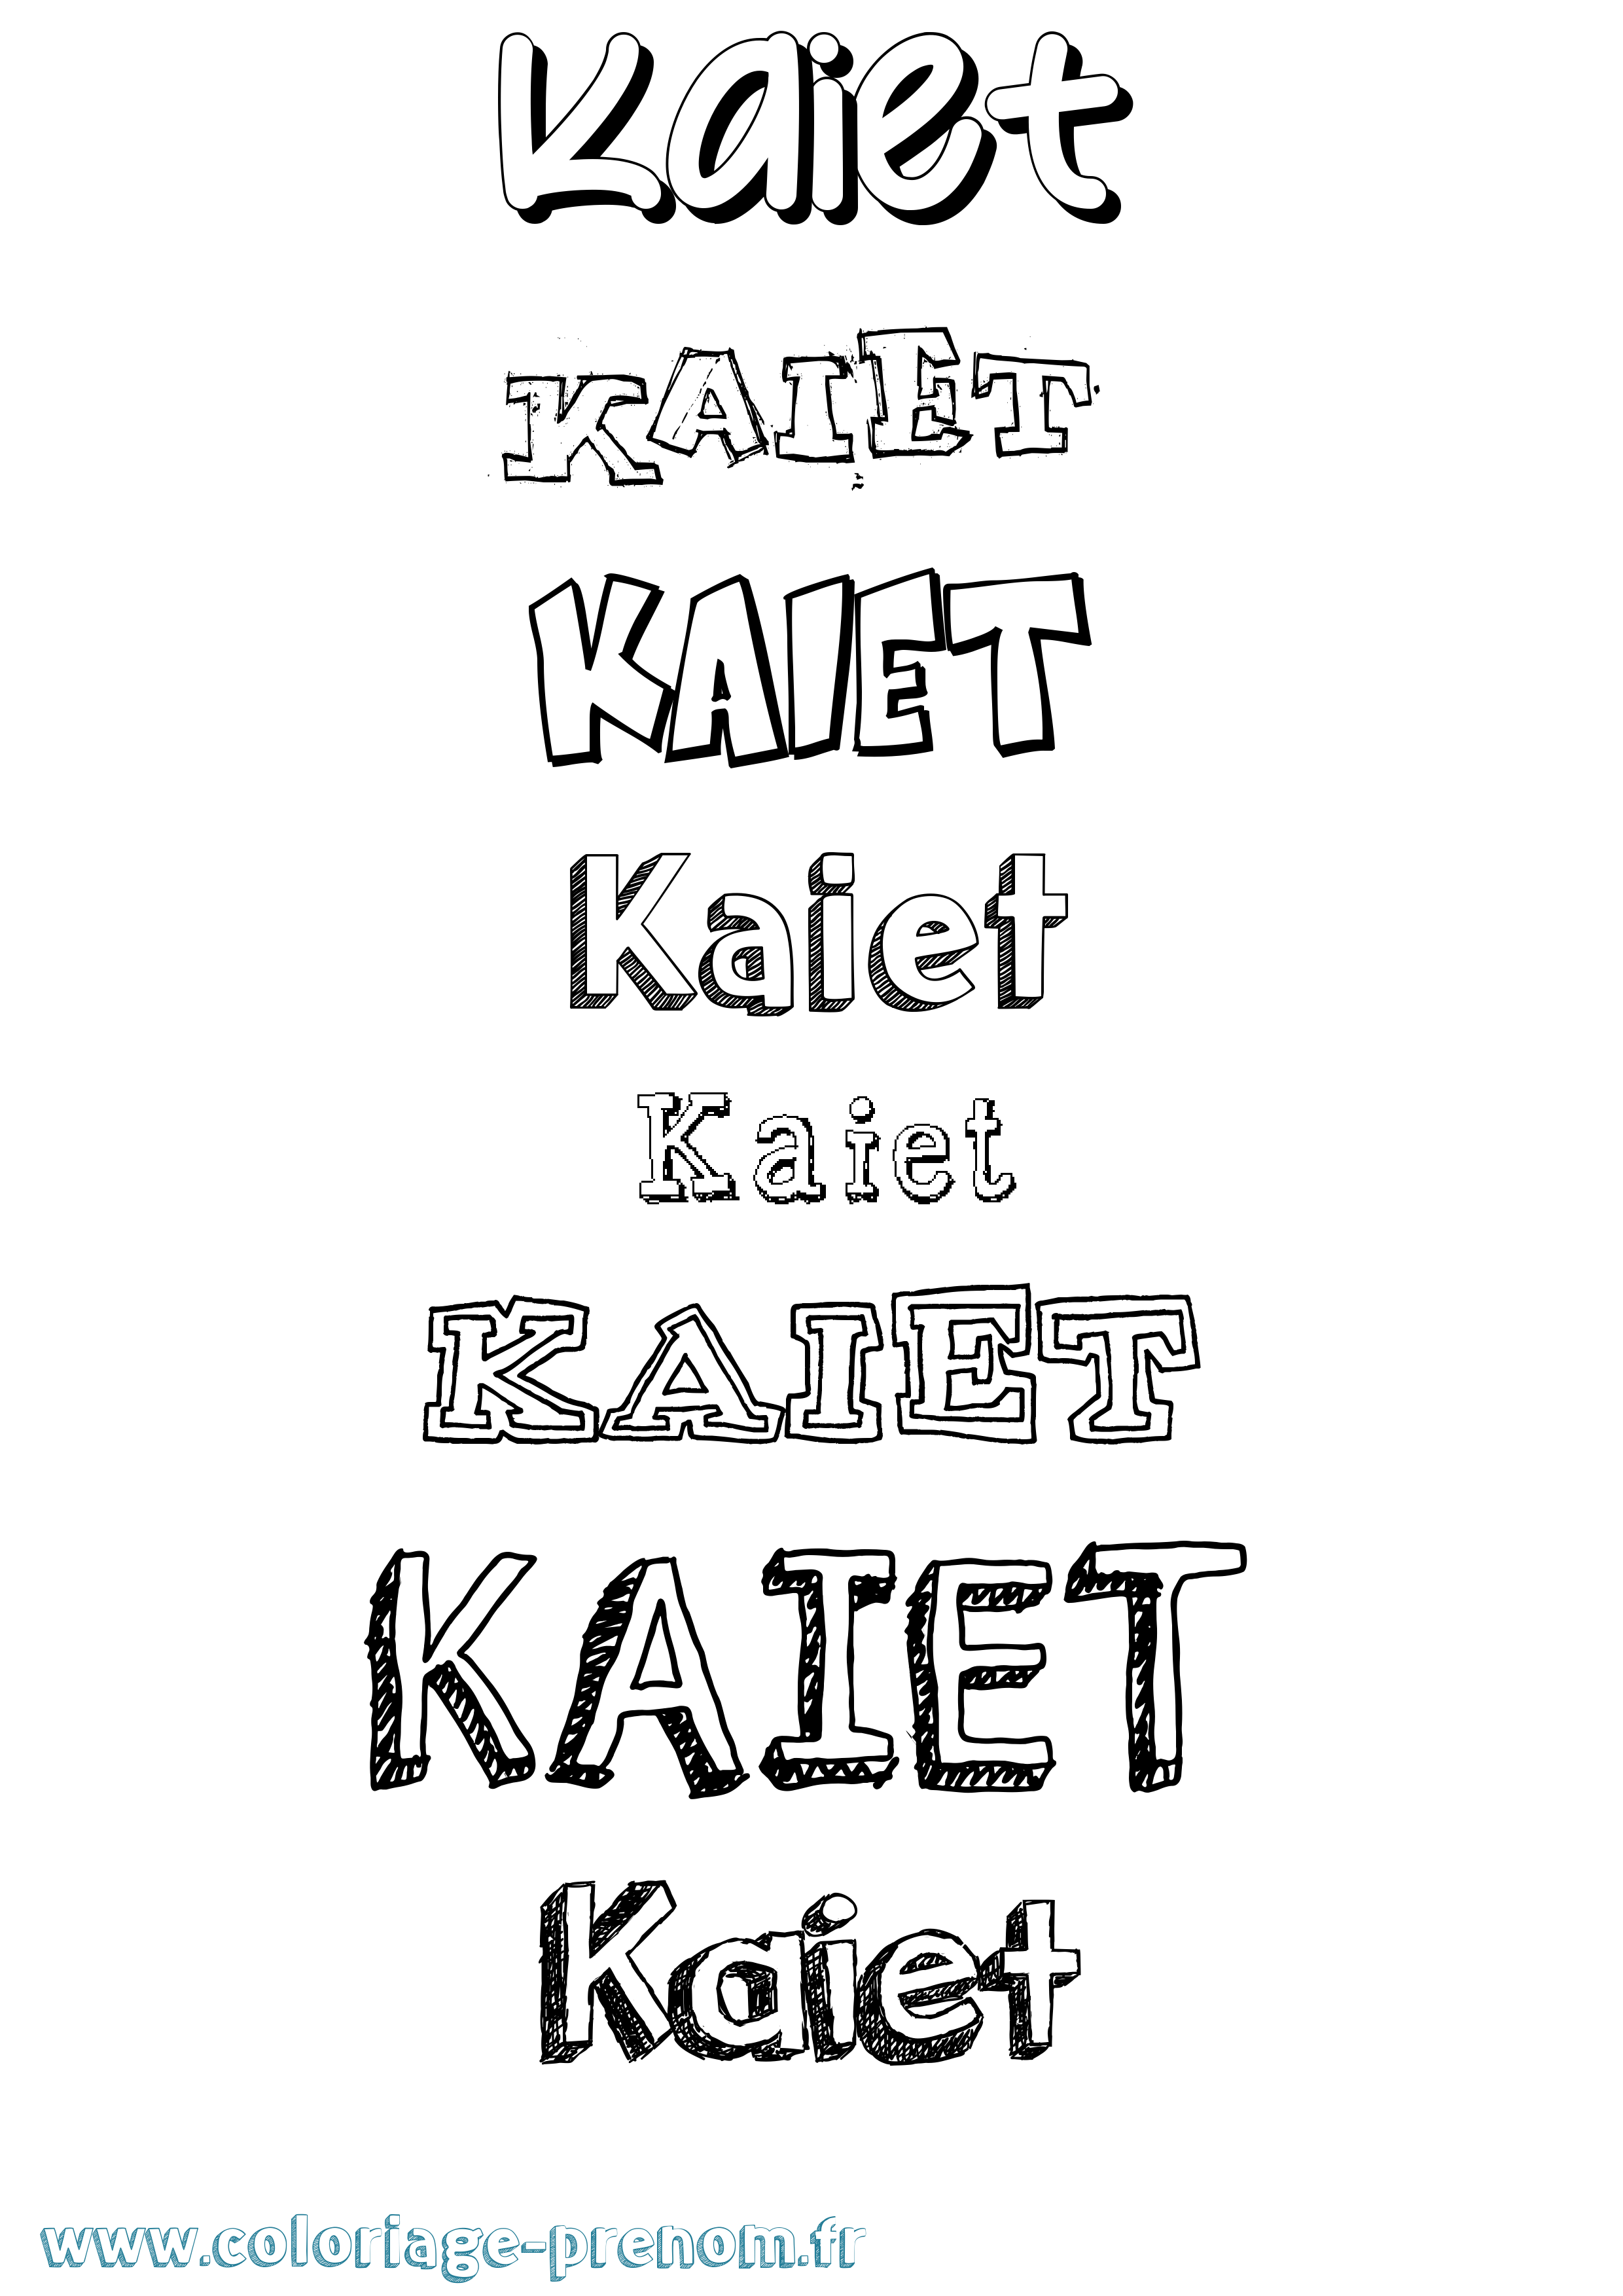 Coloriage prénom Kaiet Dessiné